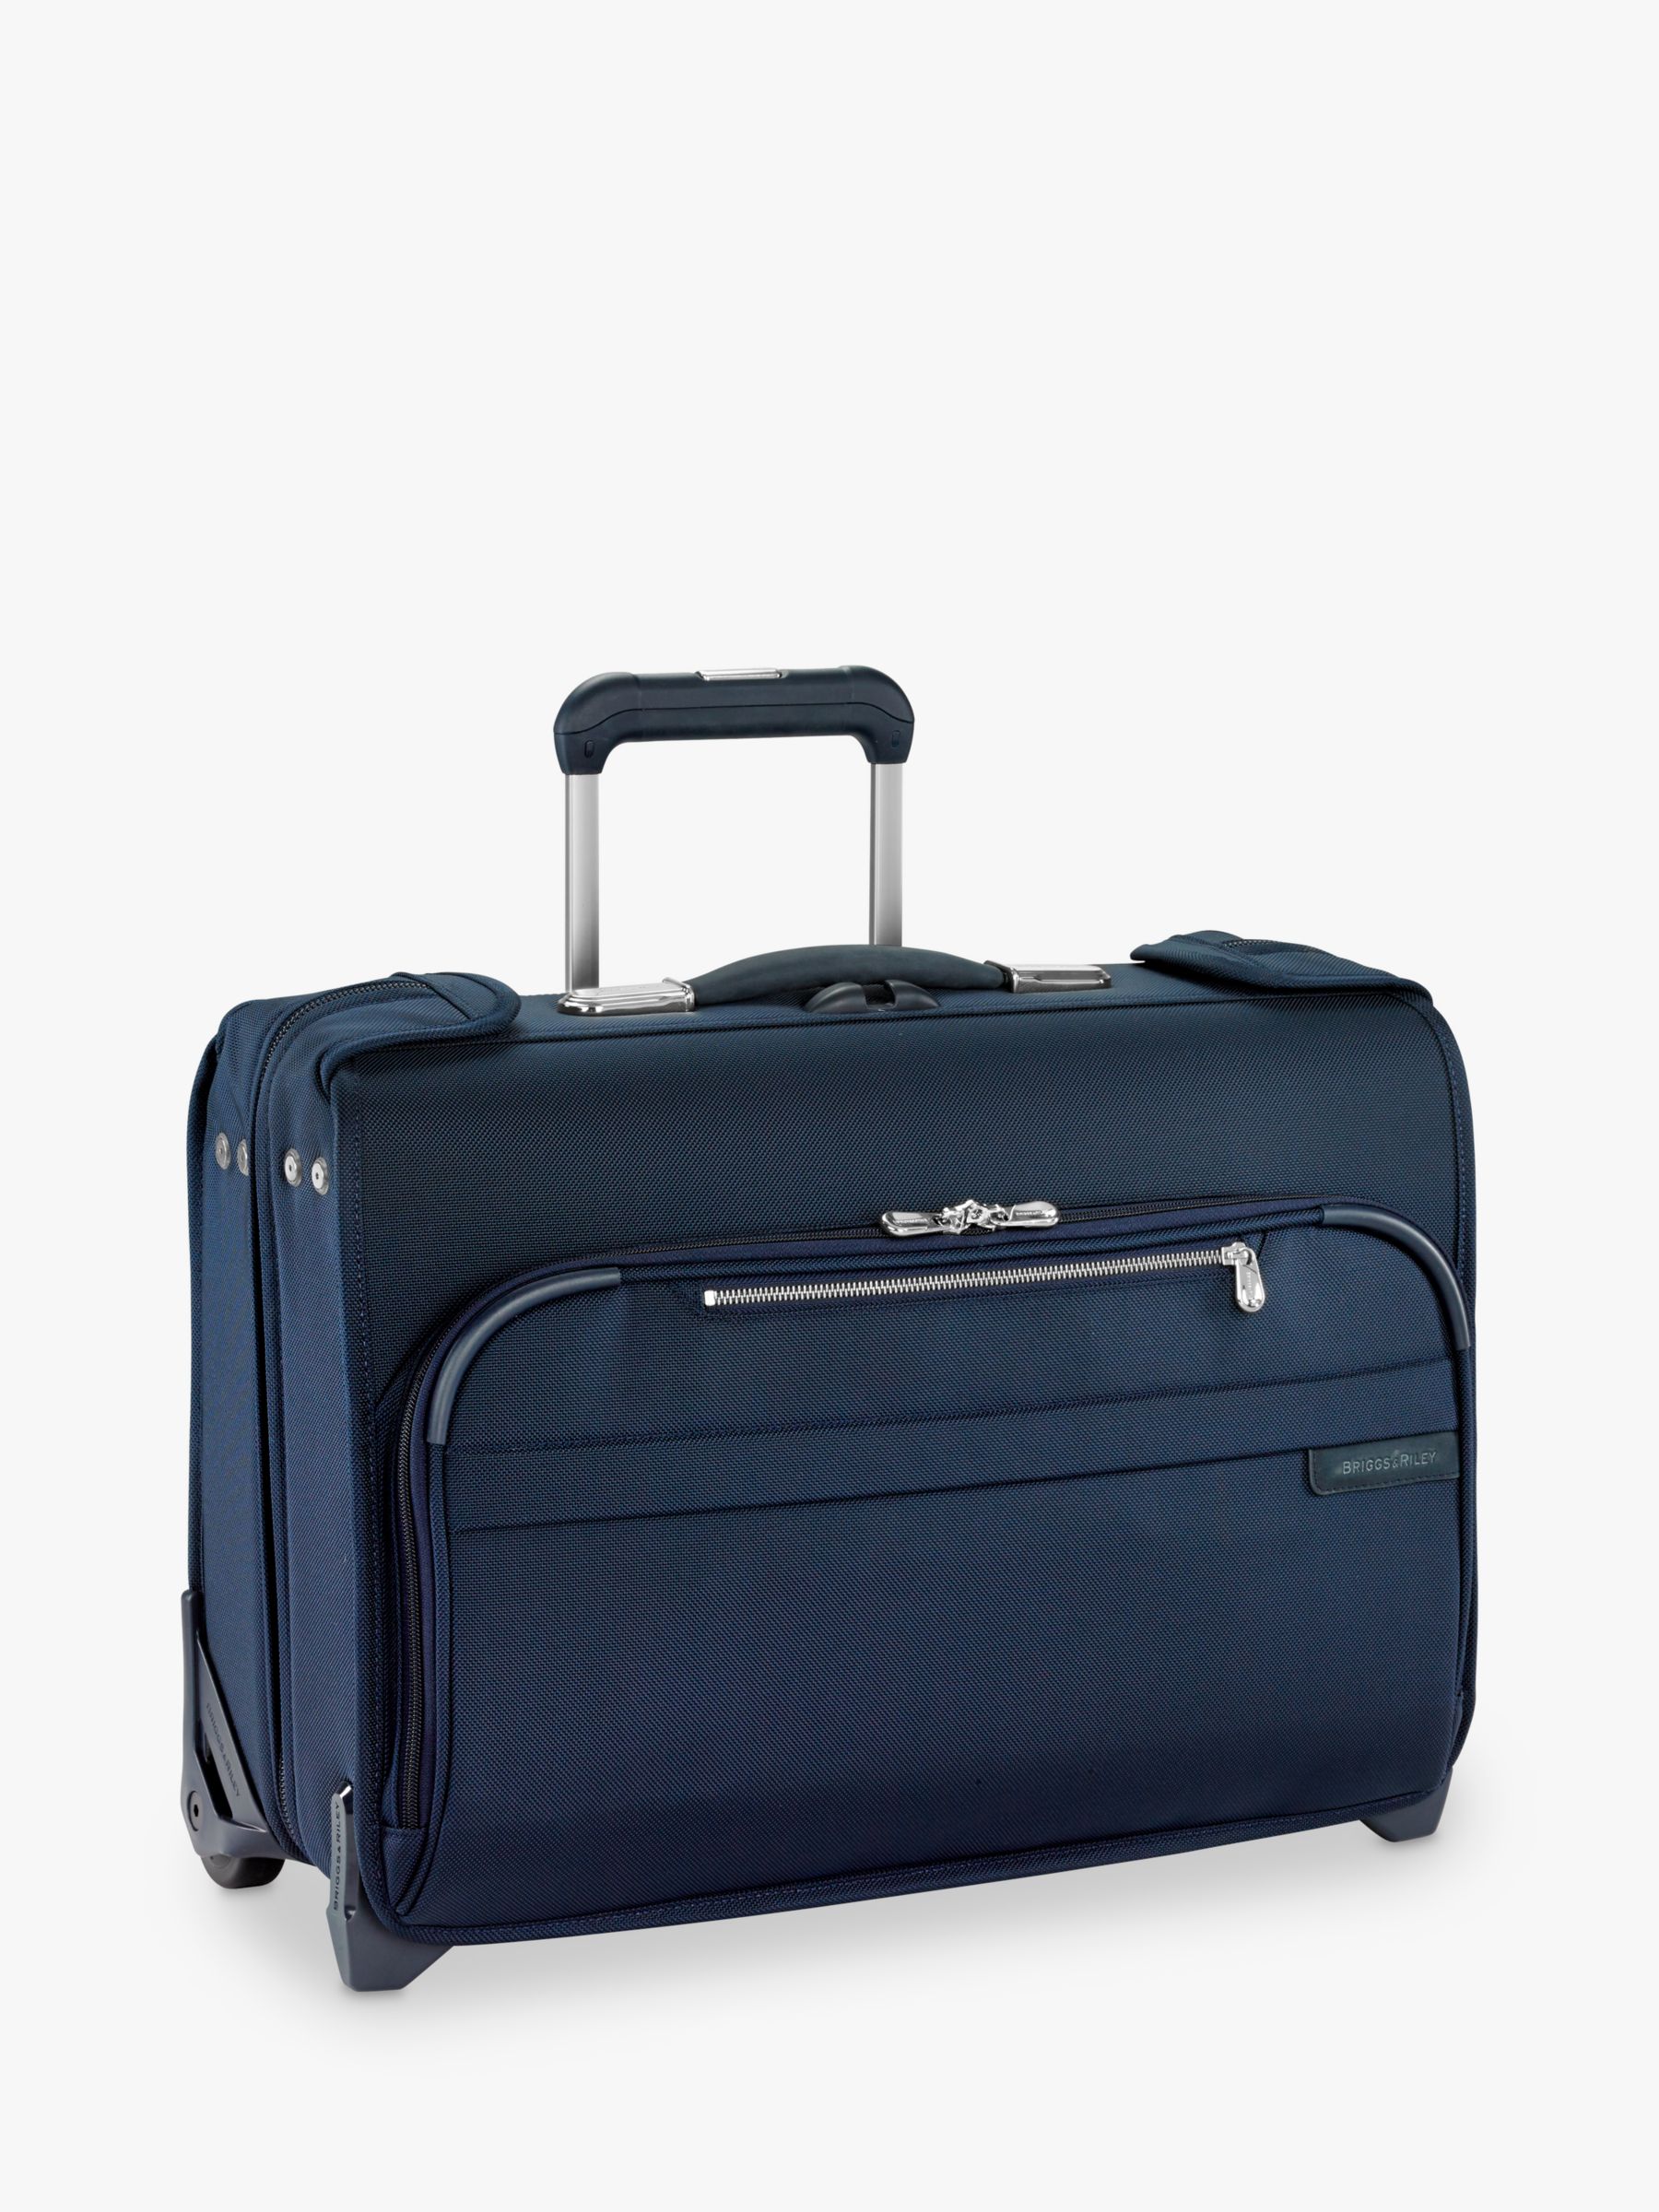 Briggs & Riley Baseline Carry-On 2-Wheel Garment Bag